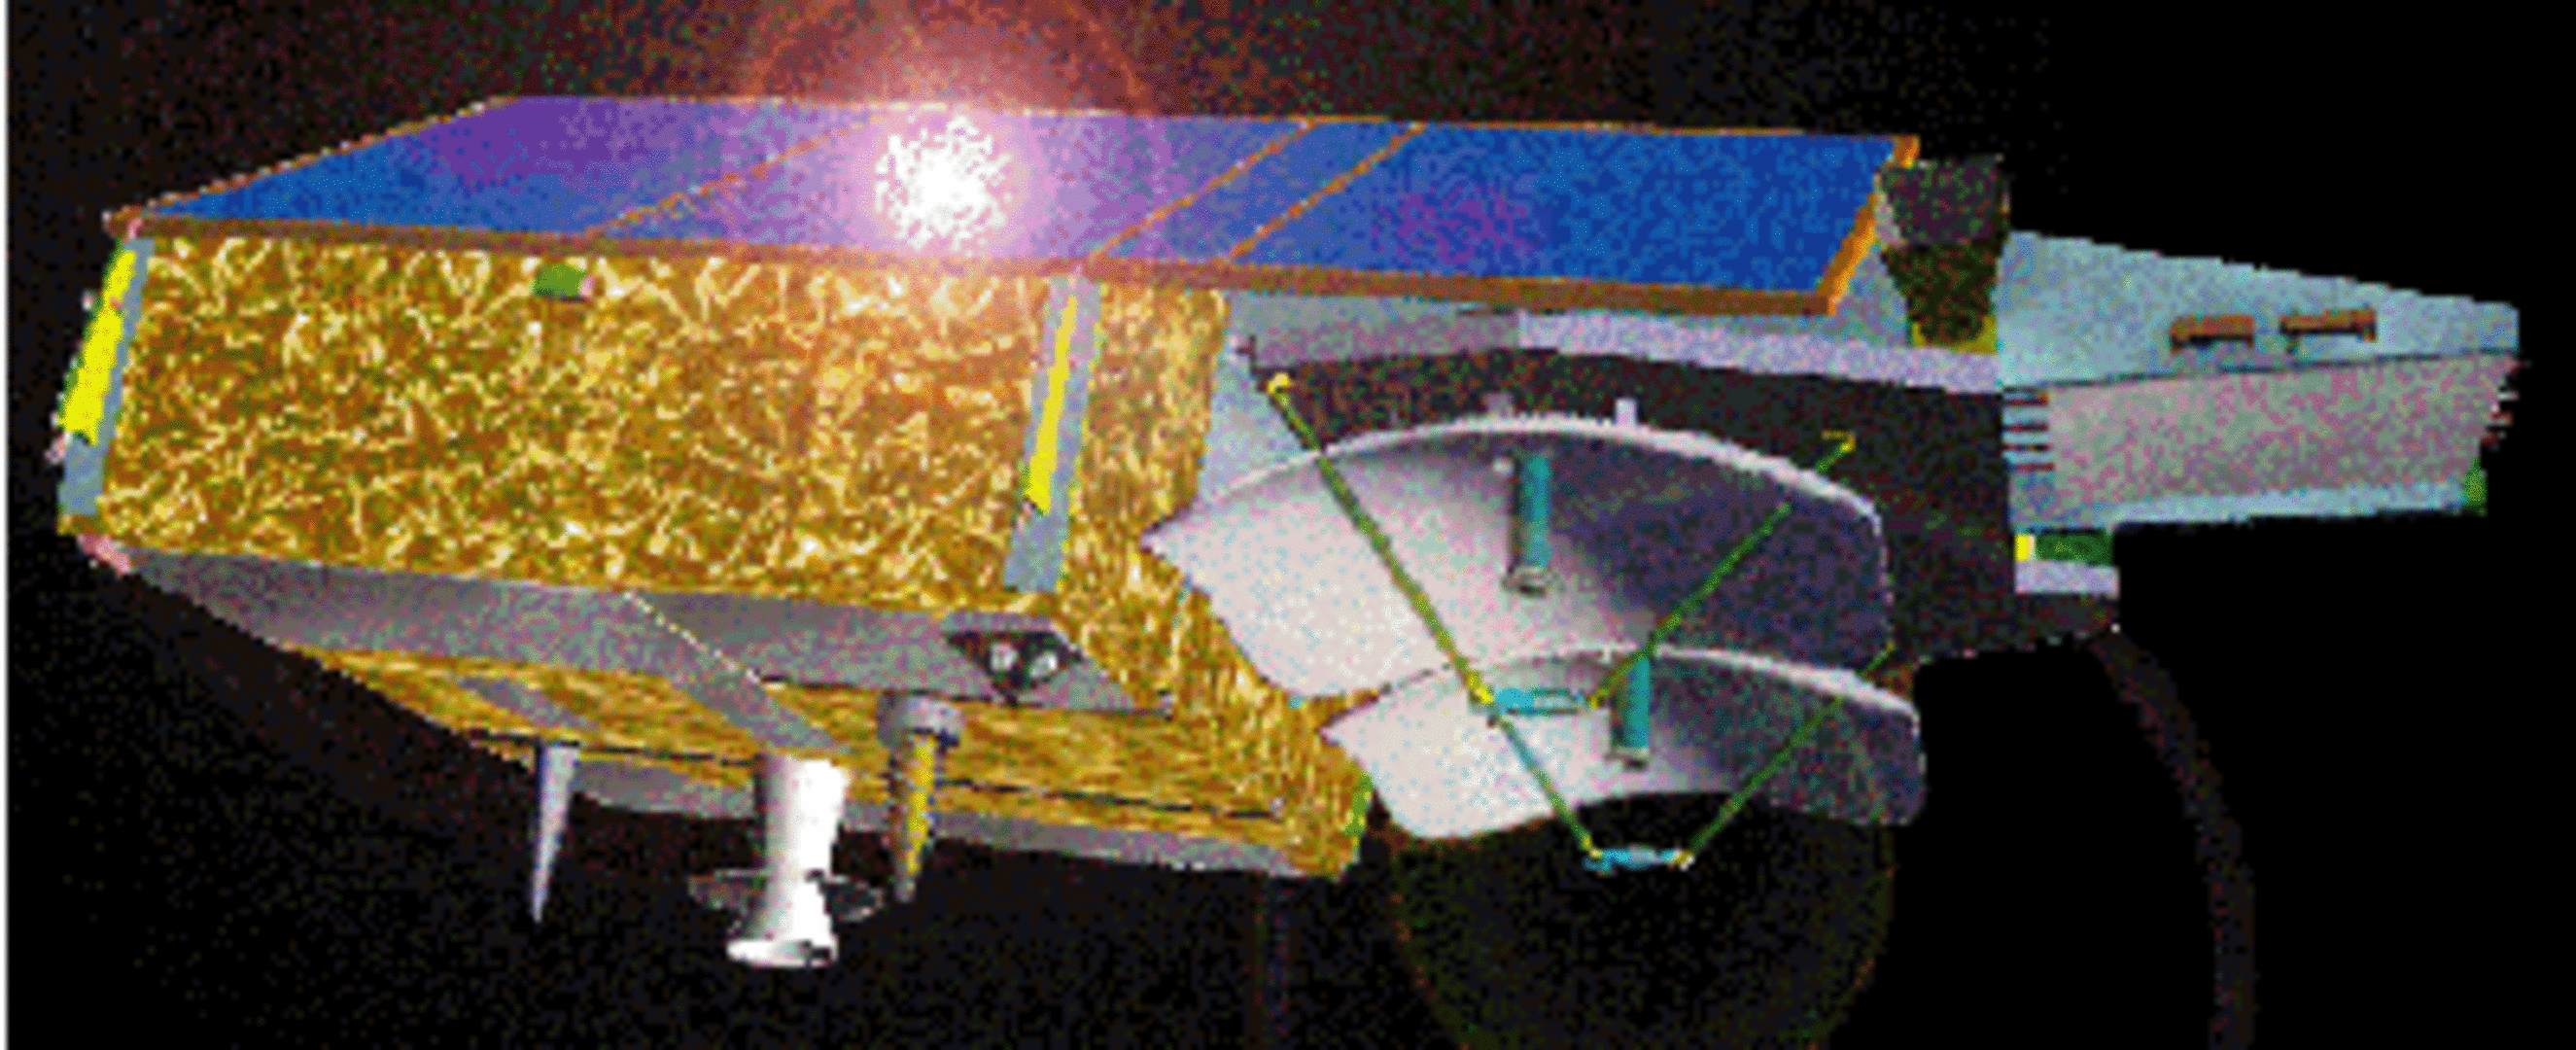 Concept illustration for the CryoSat satellite design